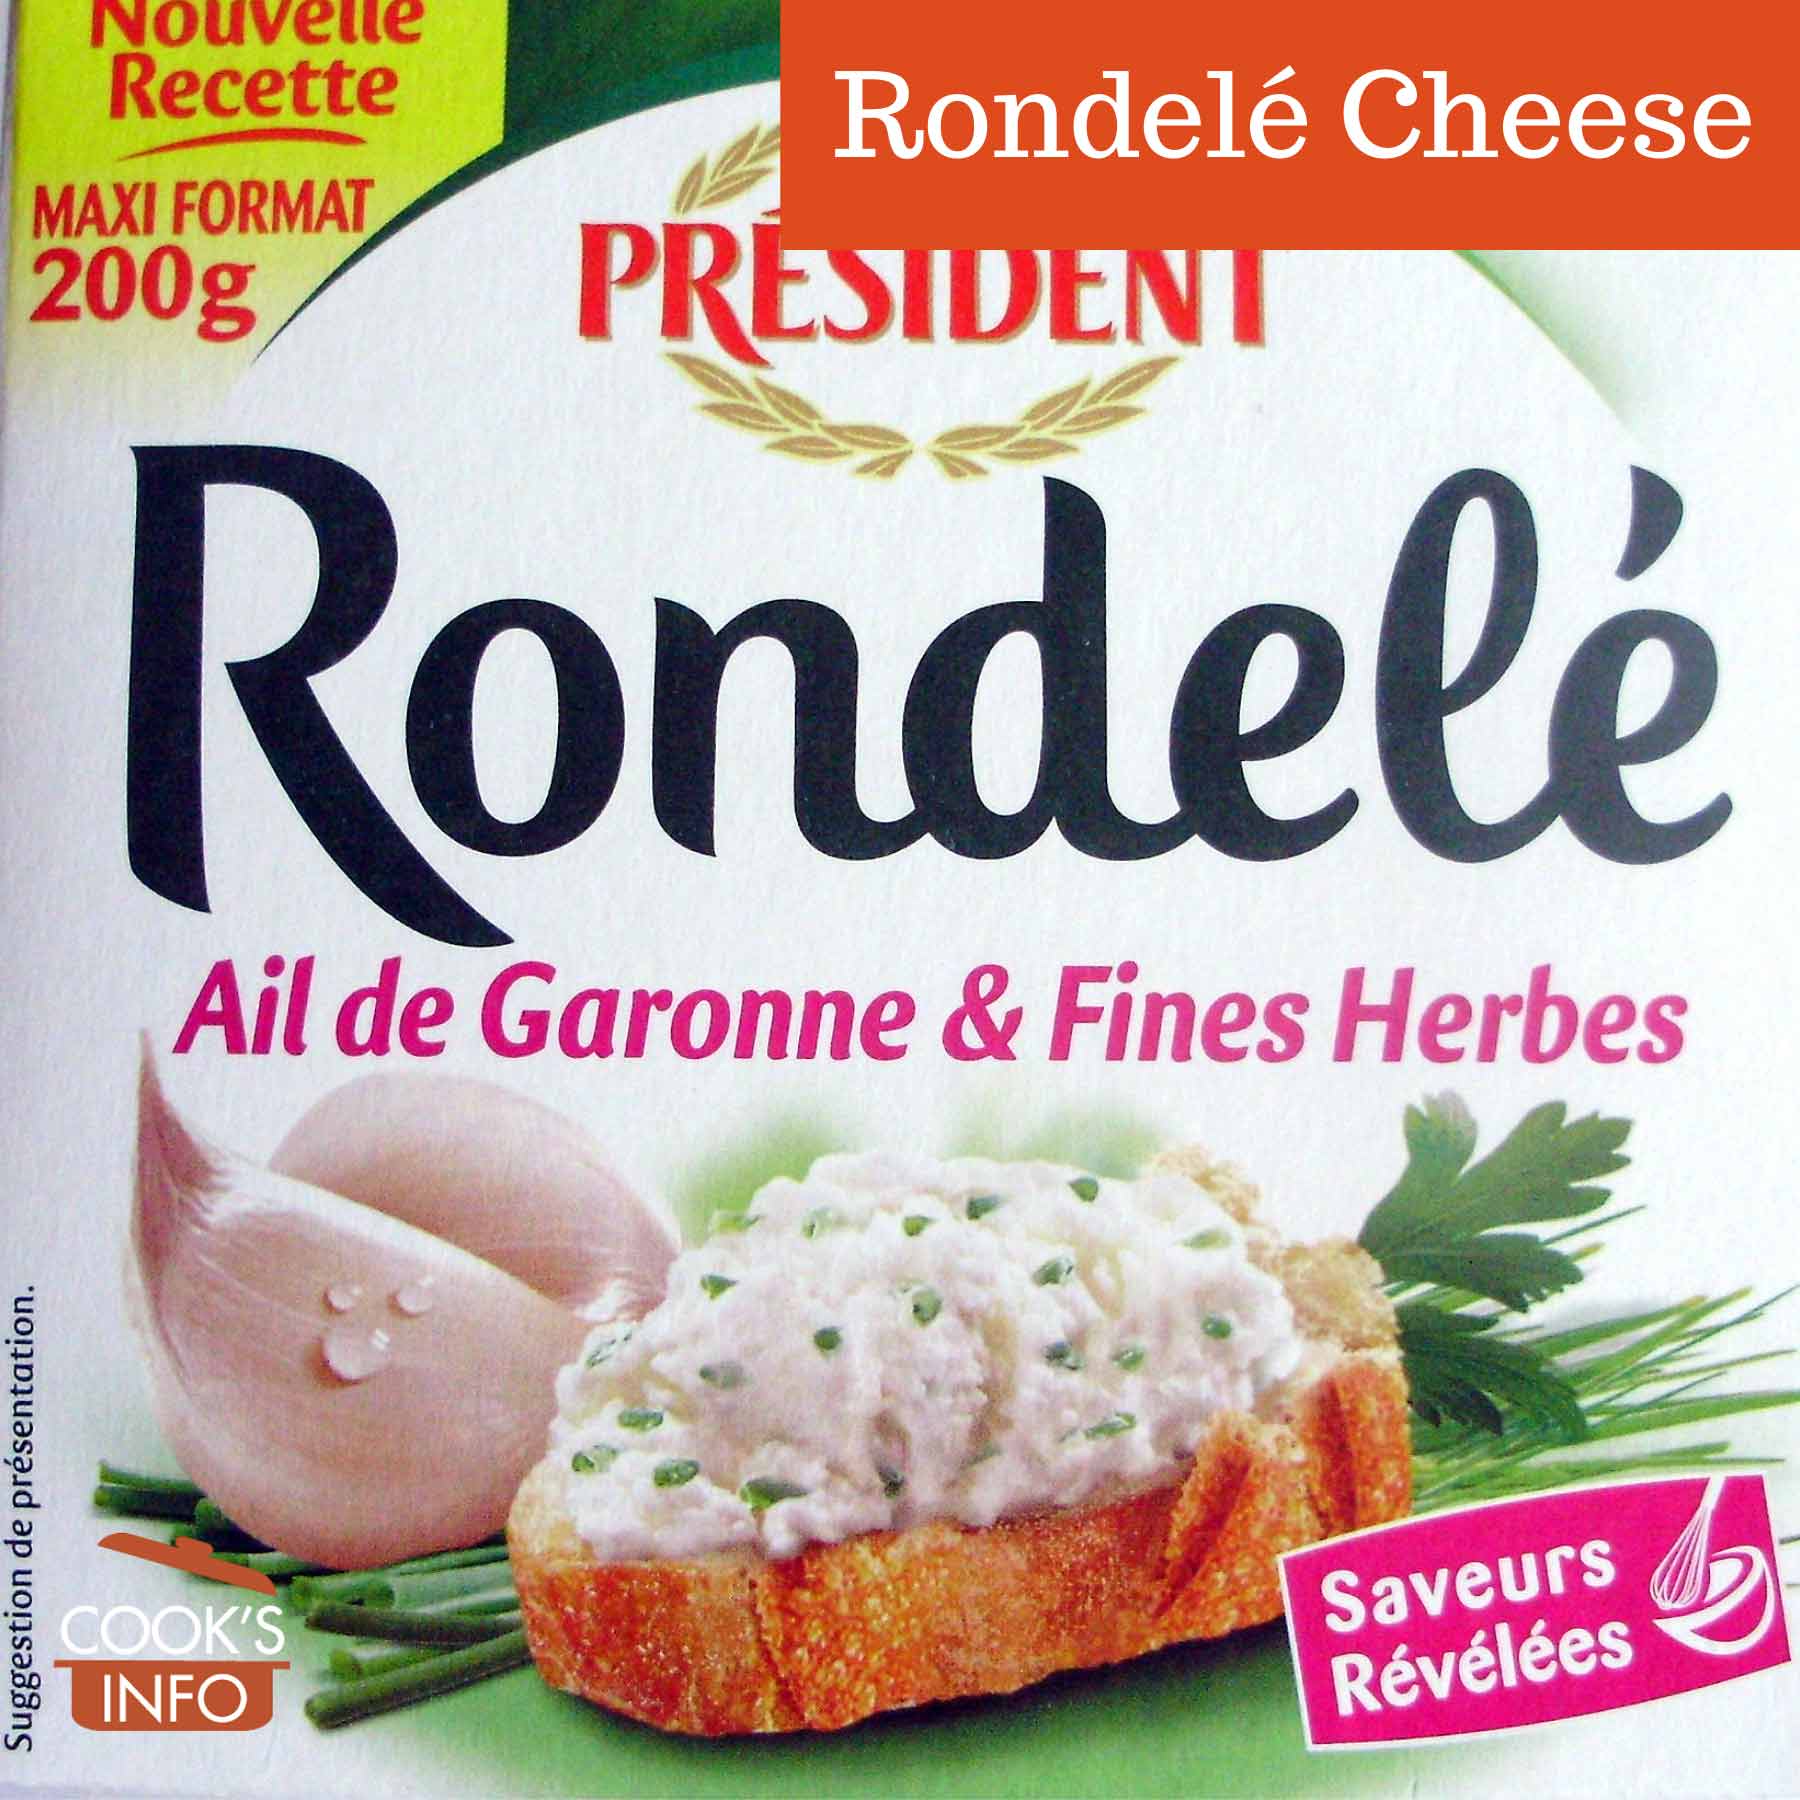 Rondele Cheese